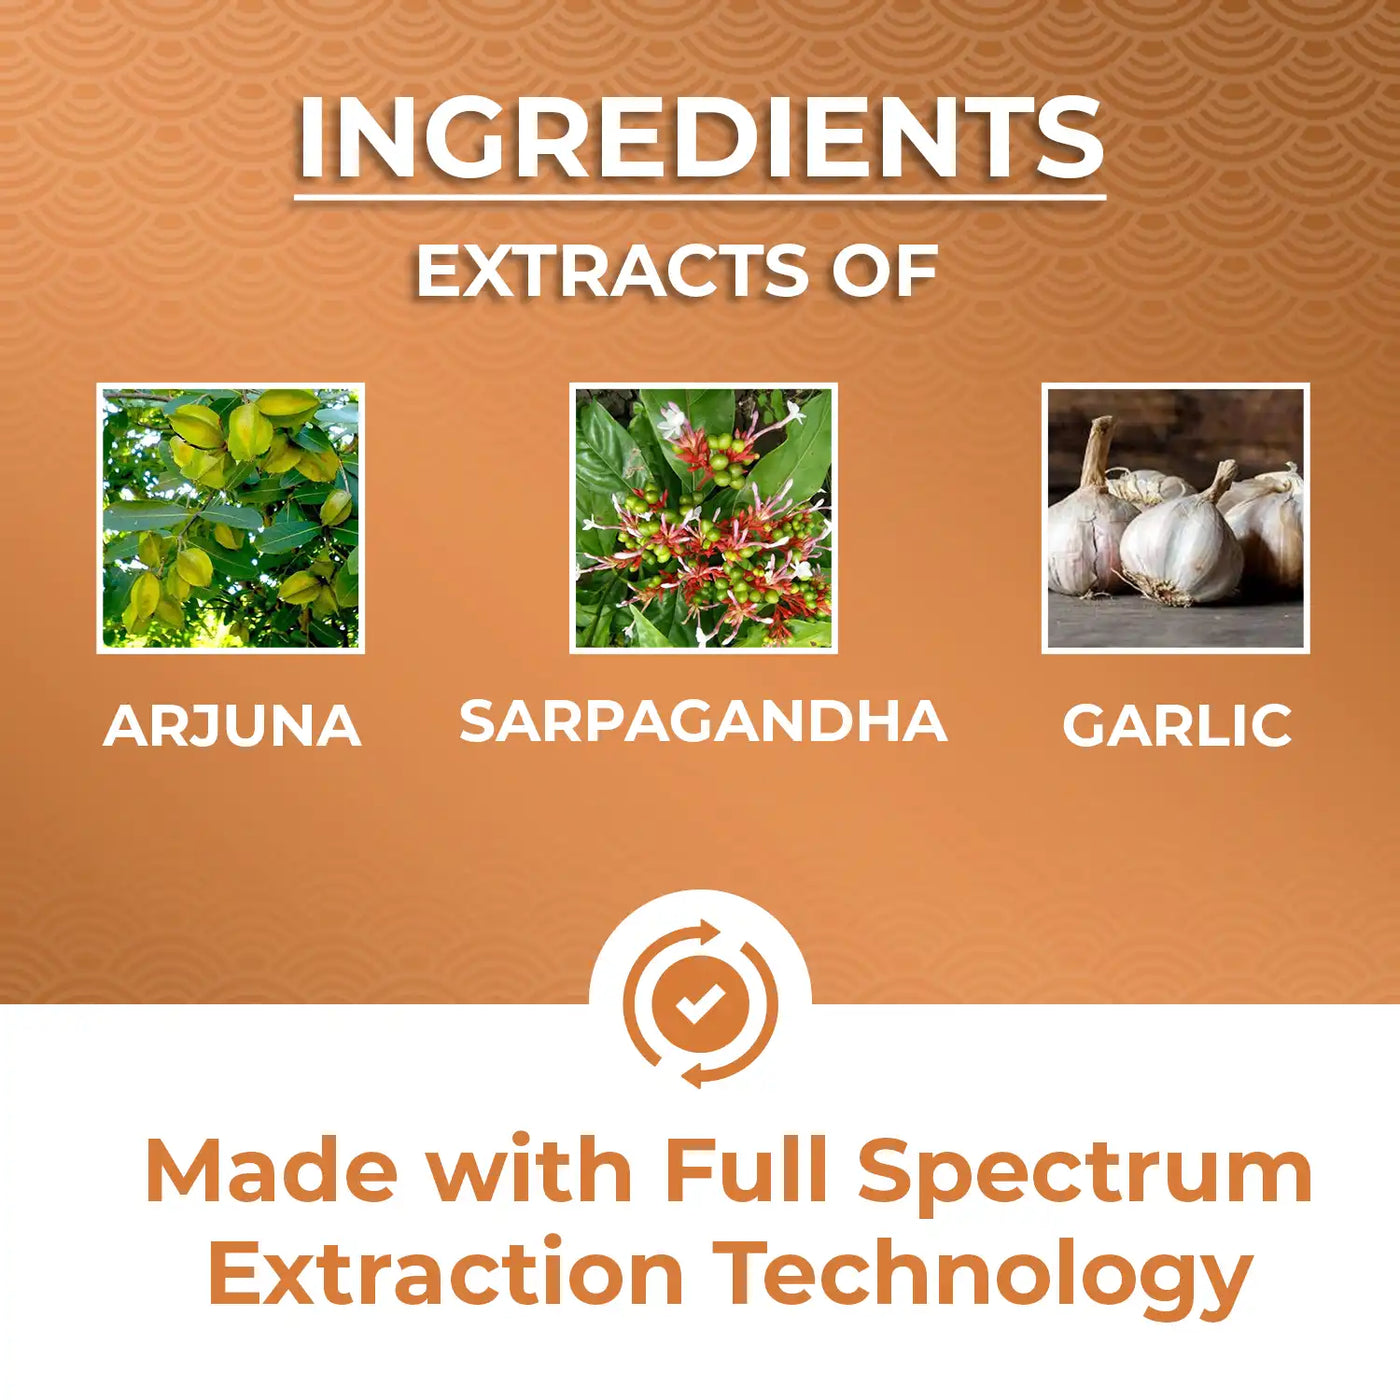 ayurvedic medicine made with arjuna, sarpagandha and garlic extracts.